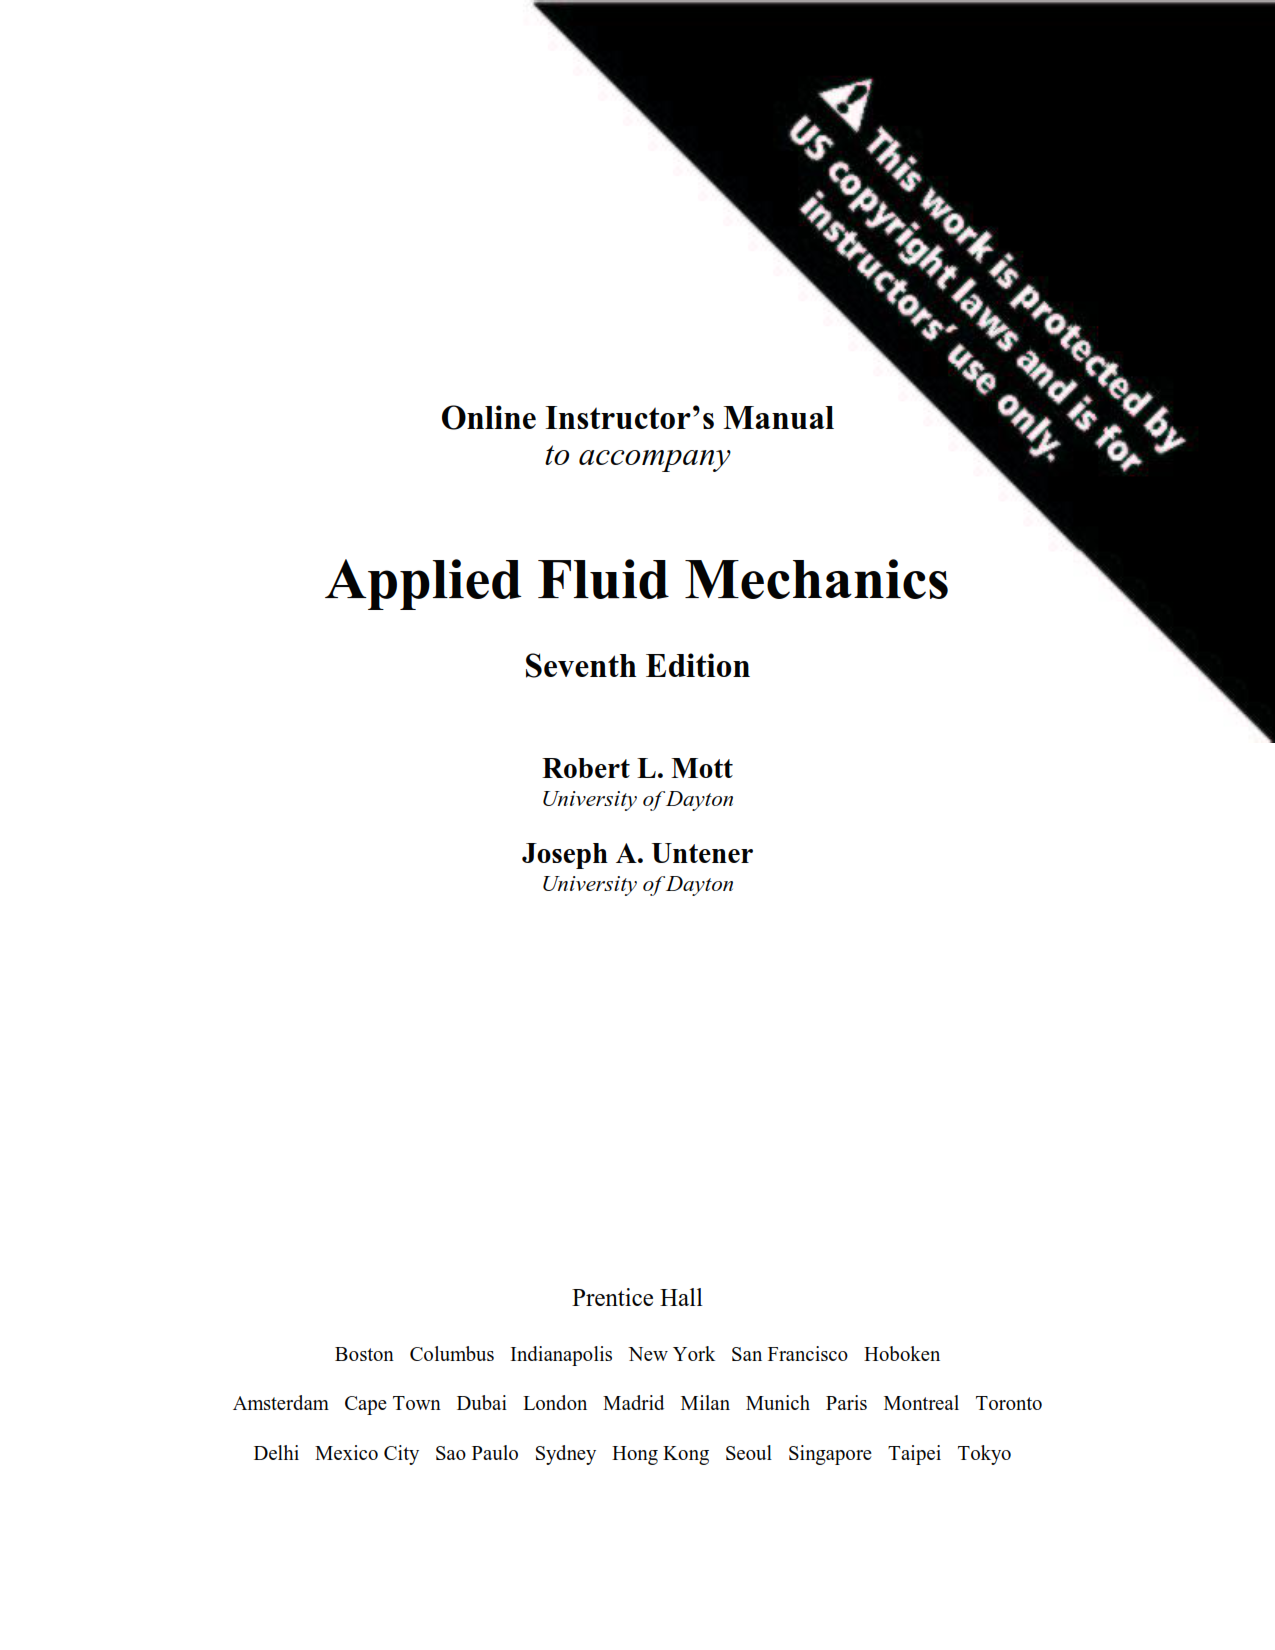 Download free Applied fluid mechanics Mott 7th edition solution manual & answer key pdf | Gioumeh solutions